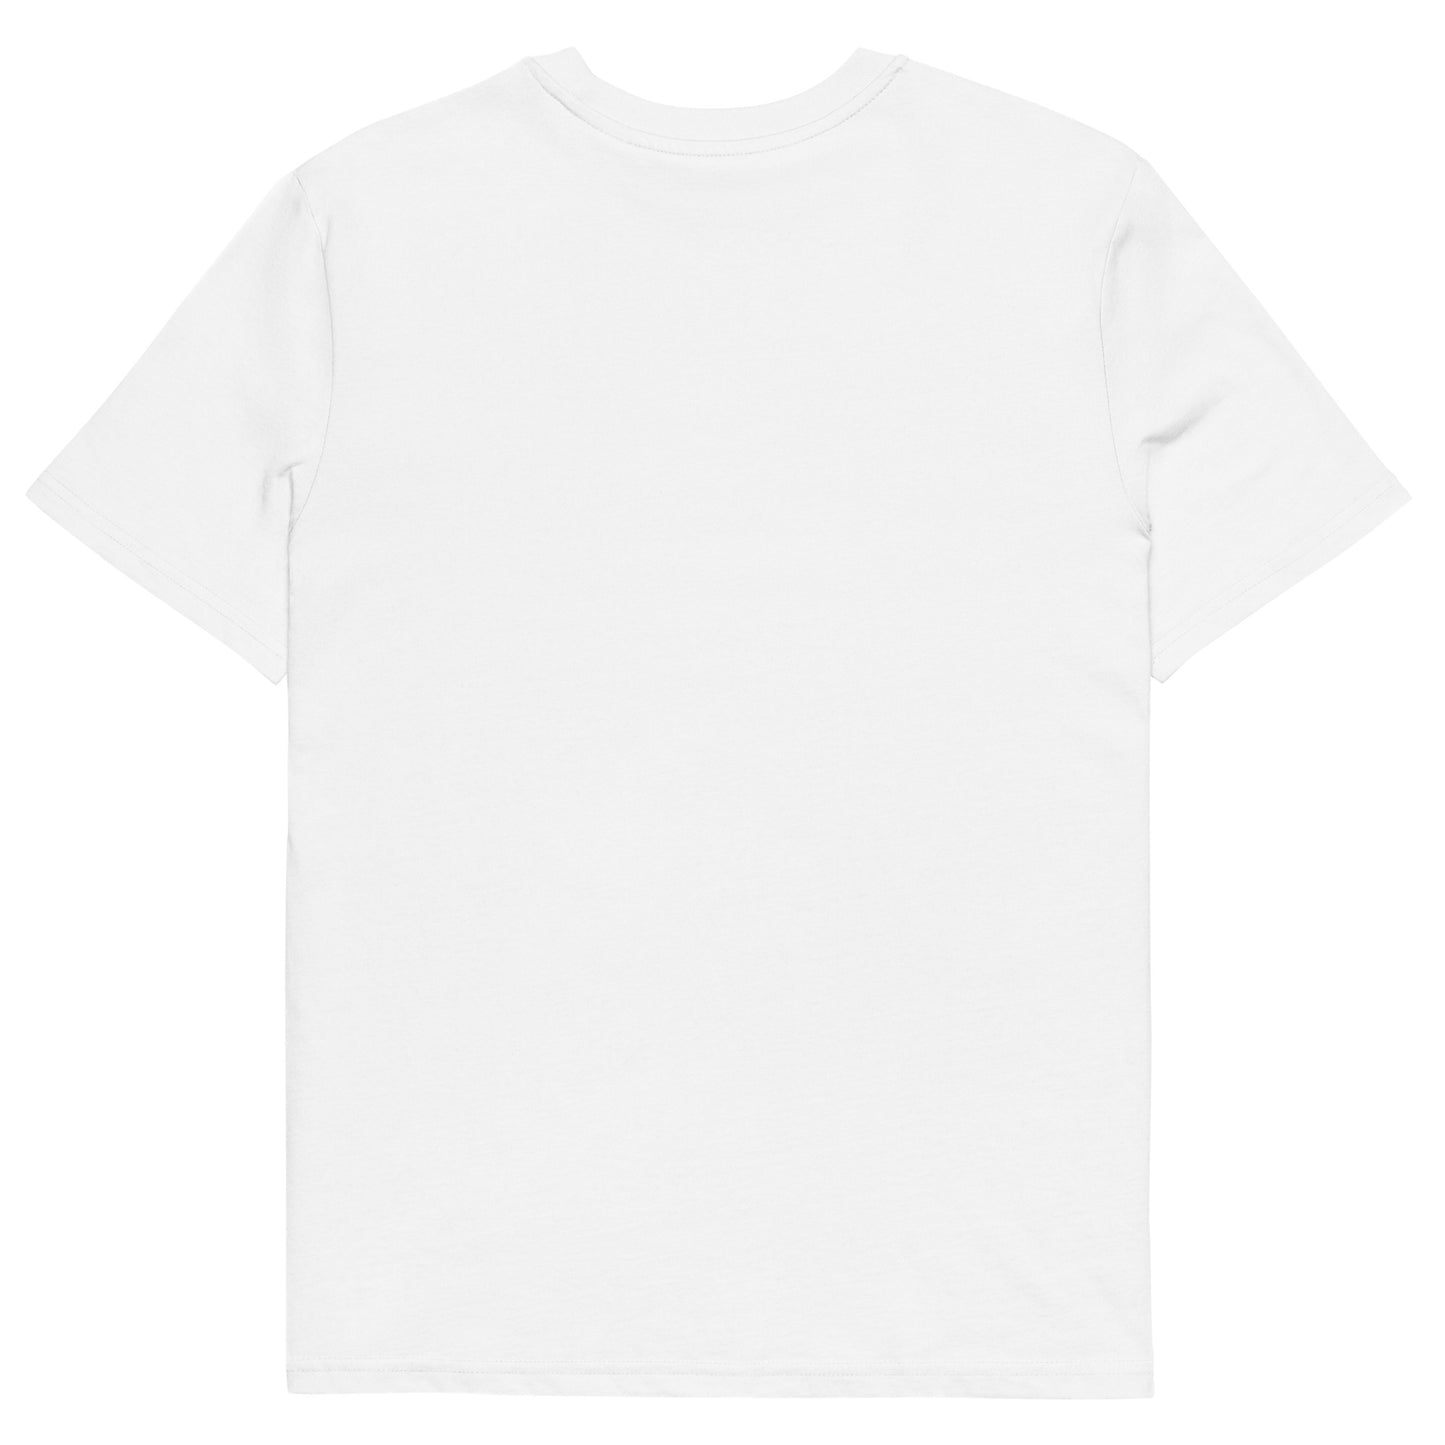 " You’re A Trip " Unisex organic cotton t-shirt